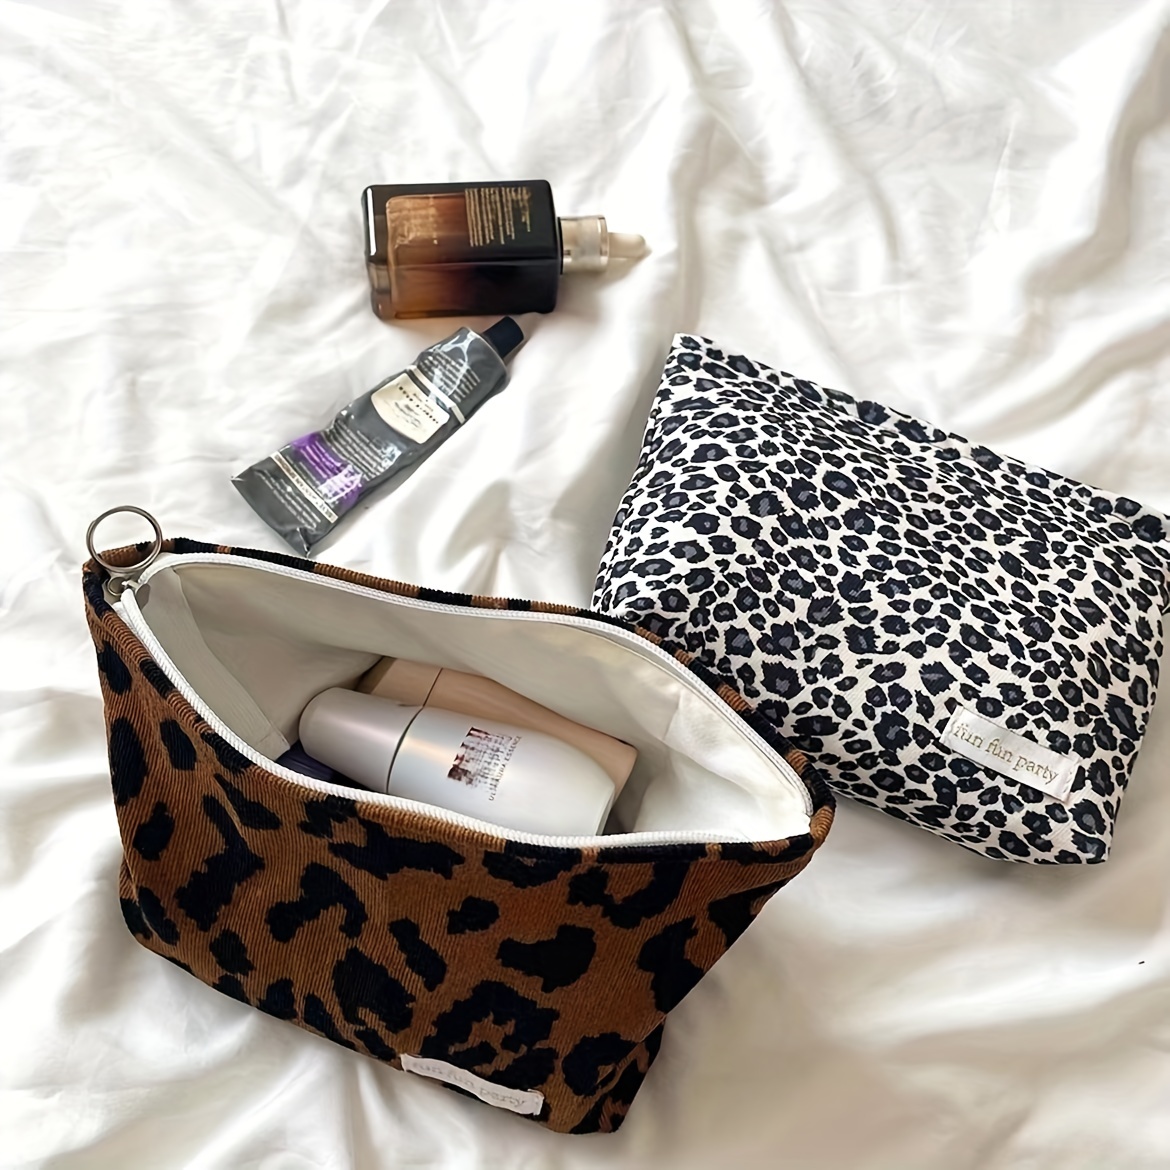 Leopard Pattern Makeup Bag Travel Toiletry Bag Portable Makeup Bag